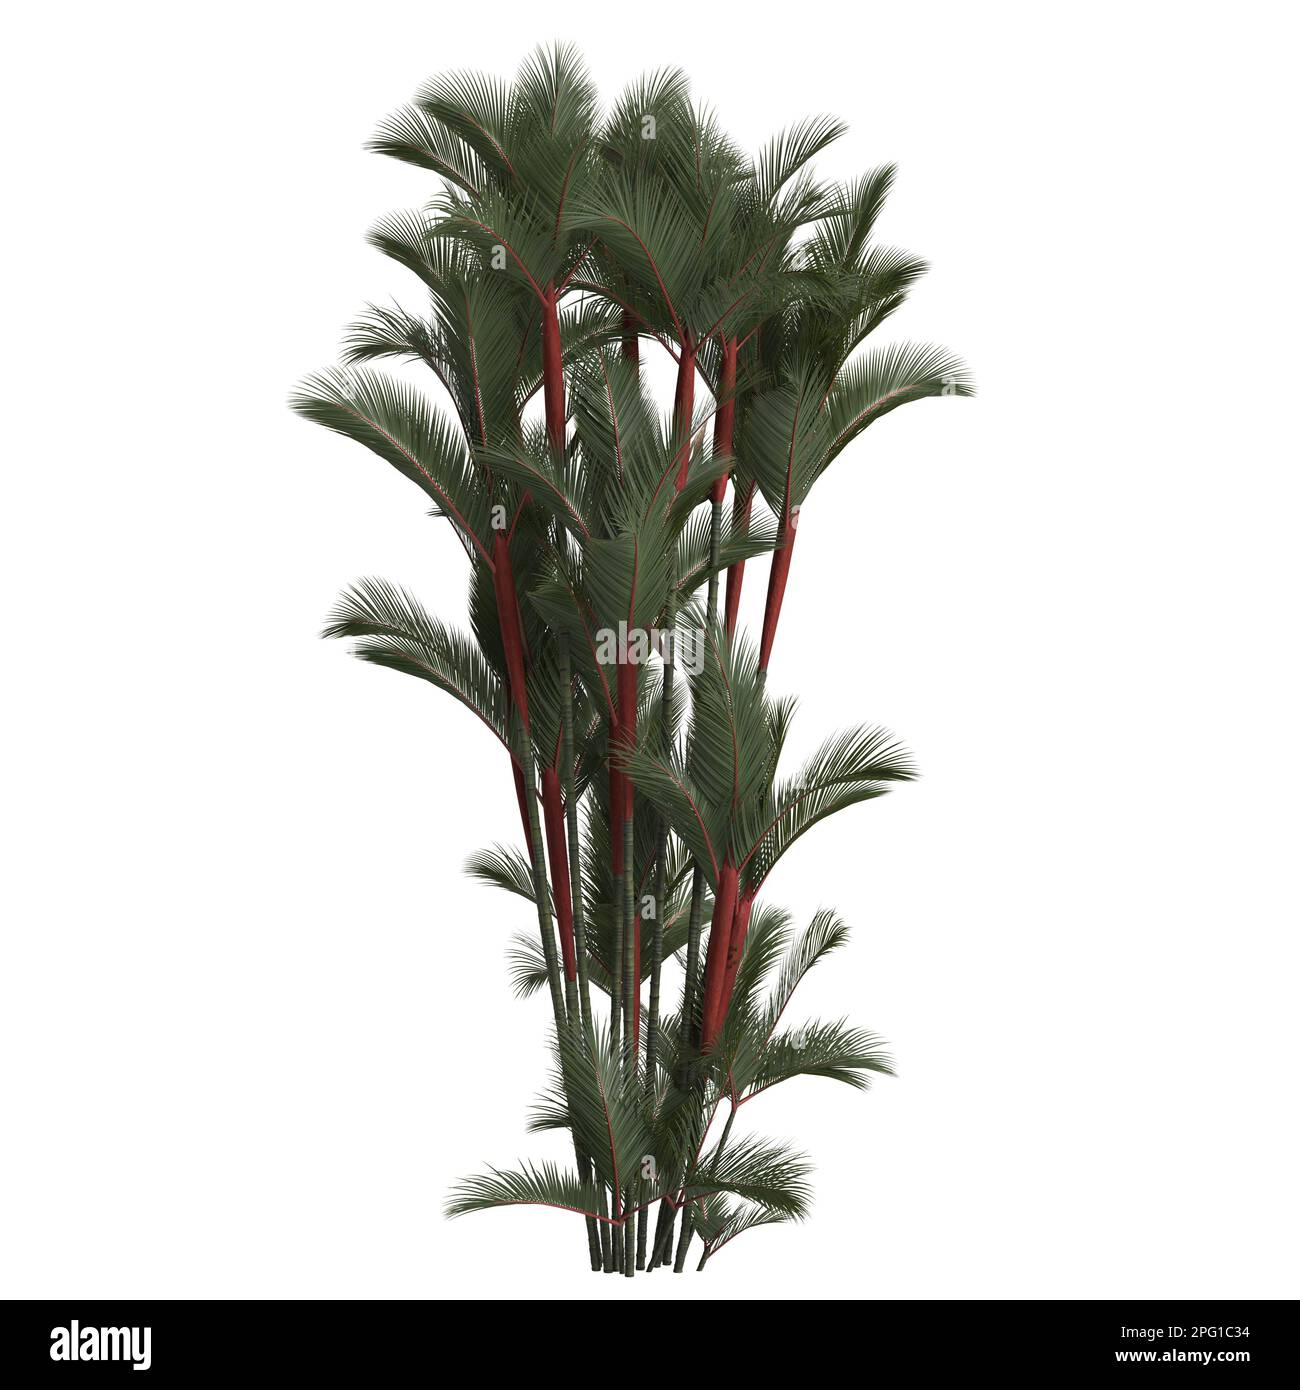 3d illustration of cyrtostachys renda palm isolated on white background Stock Photo